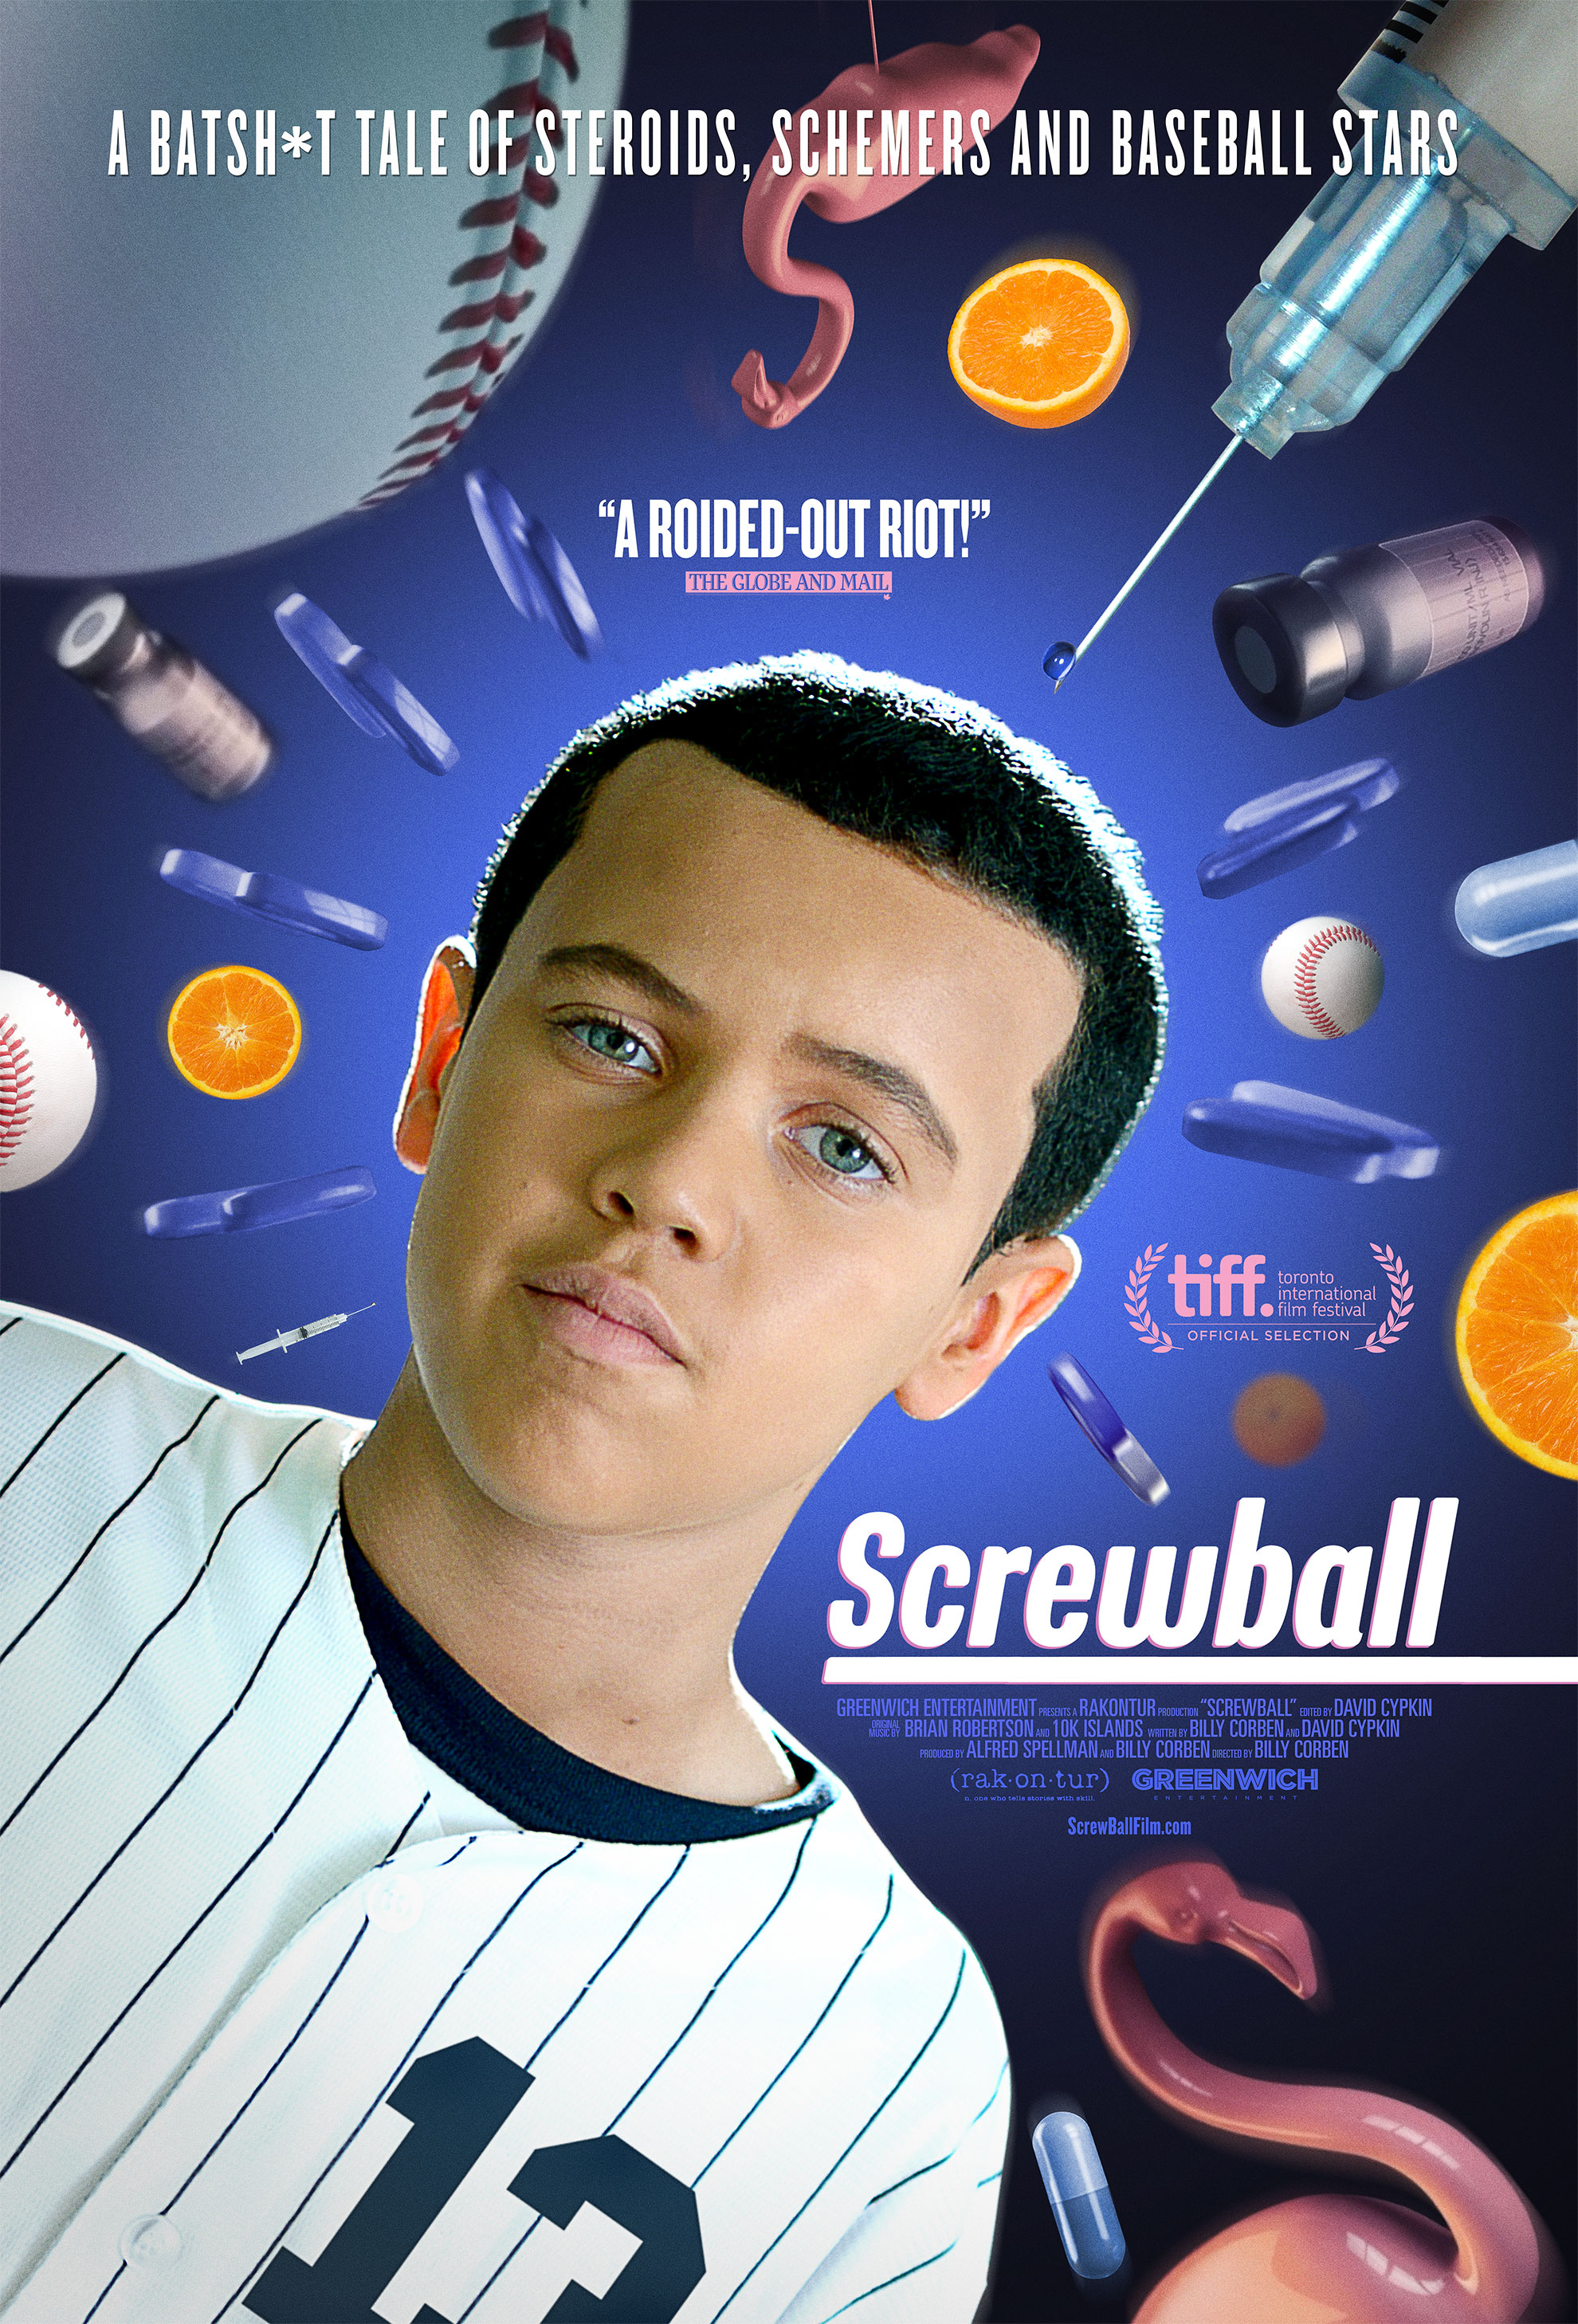 Nonton film Screwball layarkaca21 indoxx1 ganool online streaming terbaru